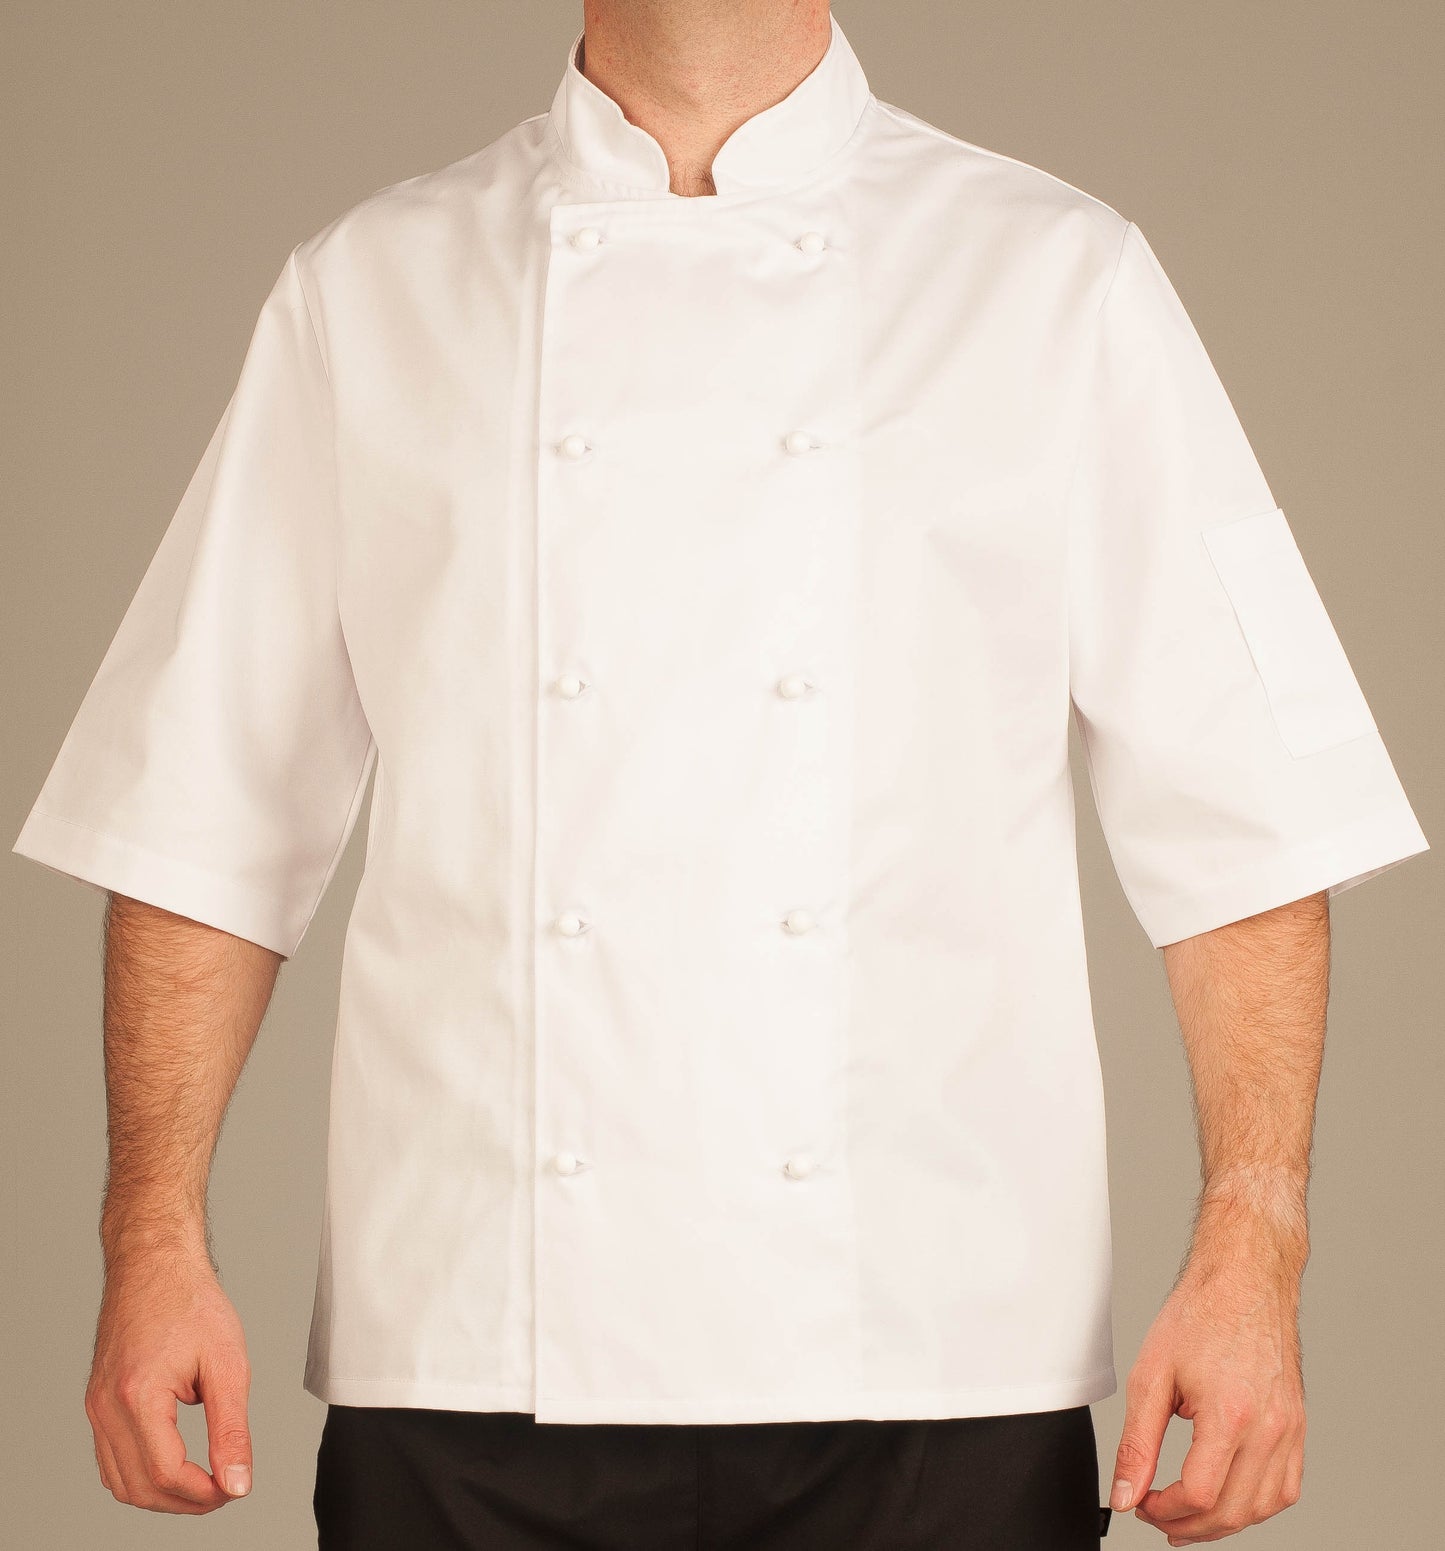 Short Sleeve White Chefs Jacket